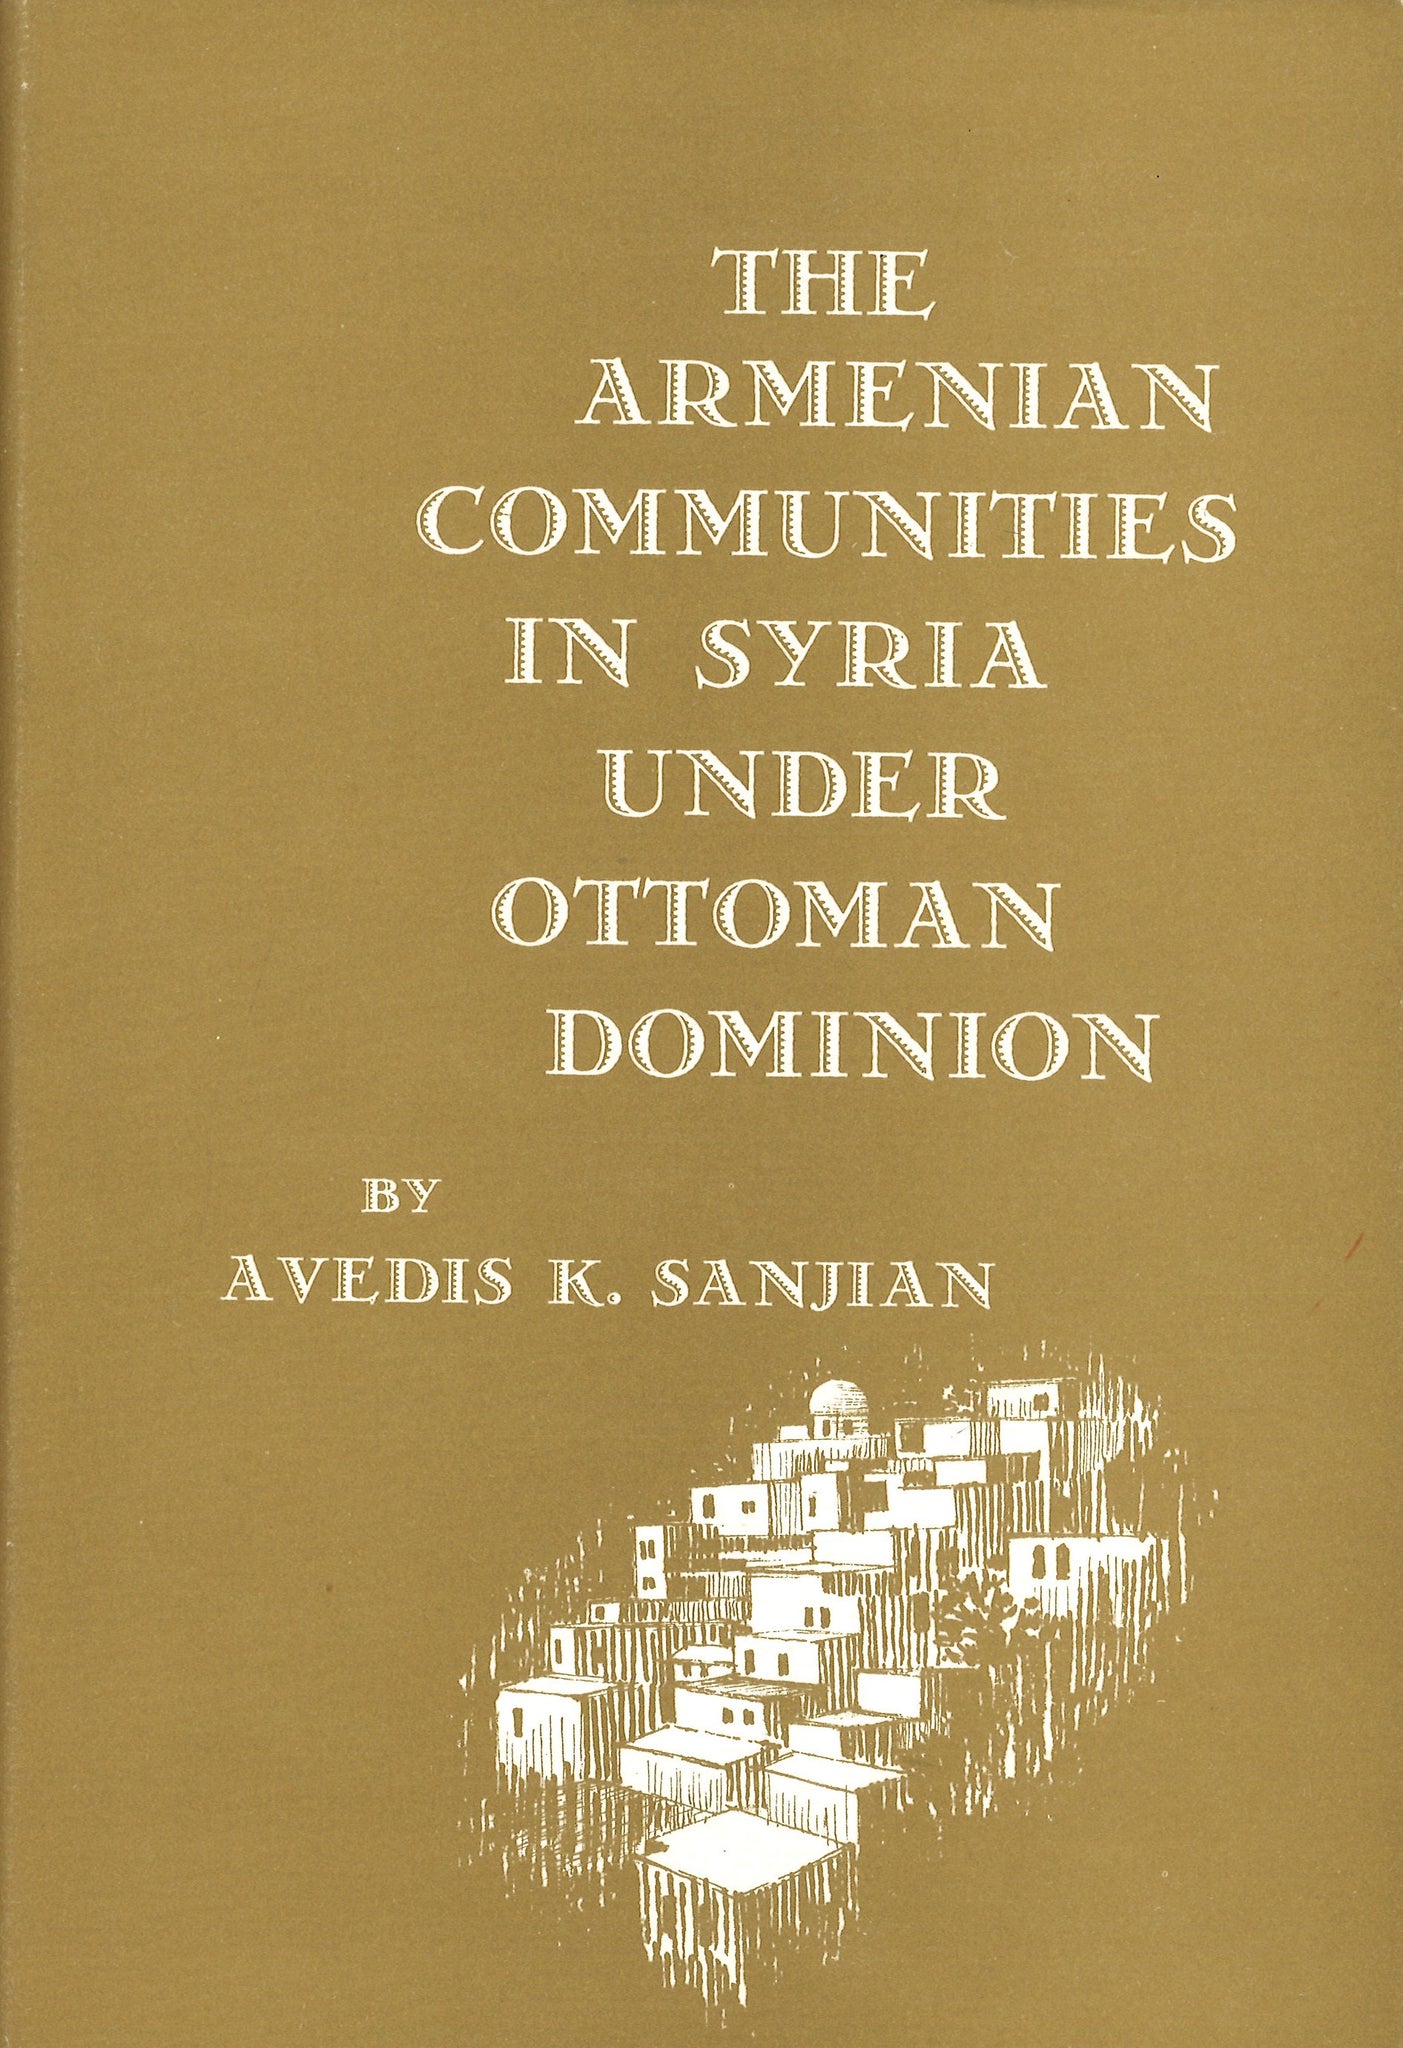 ARMENIAN COMMUNITIES IN SYRIA UNDER OTTOMAN DOMINION, THE